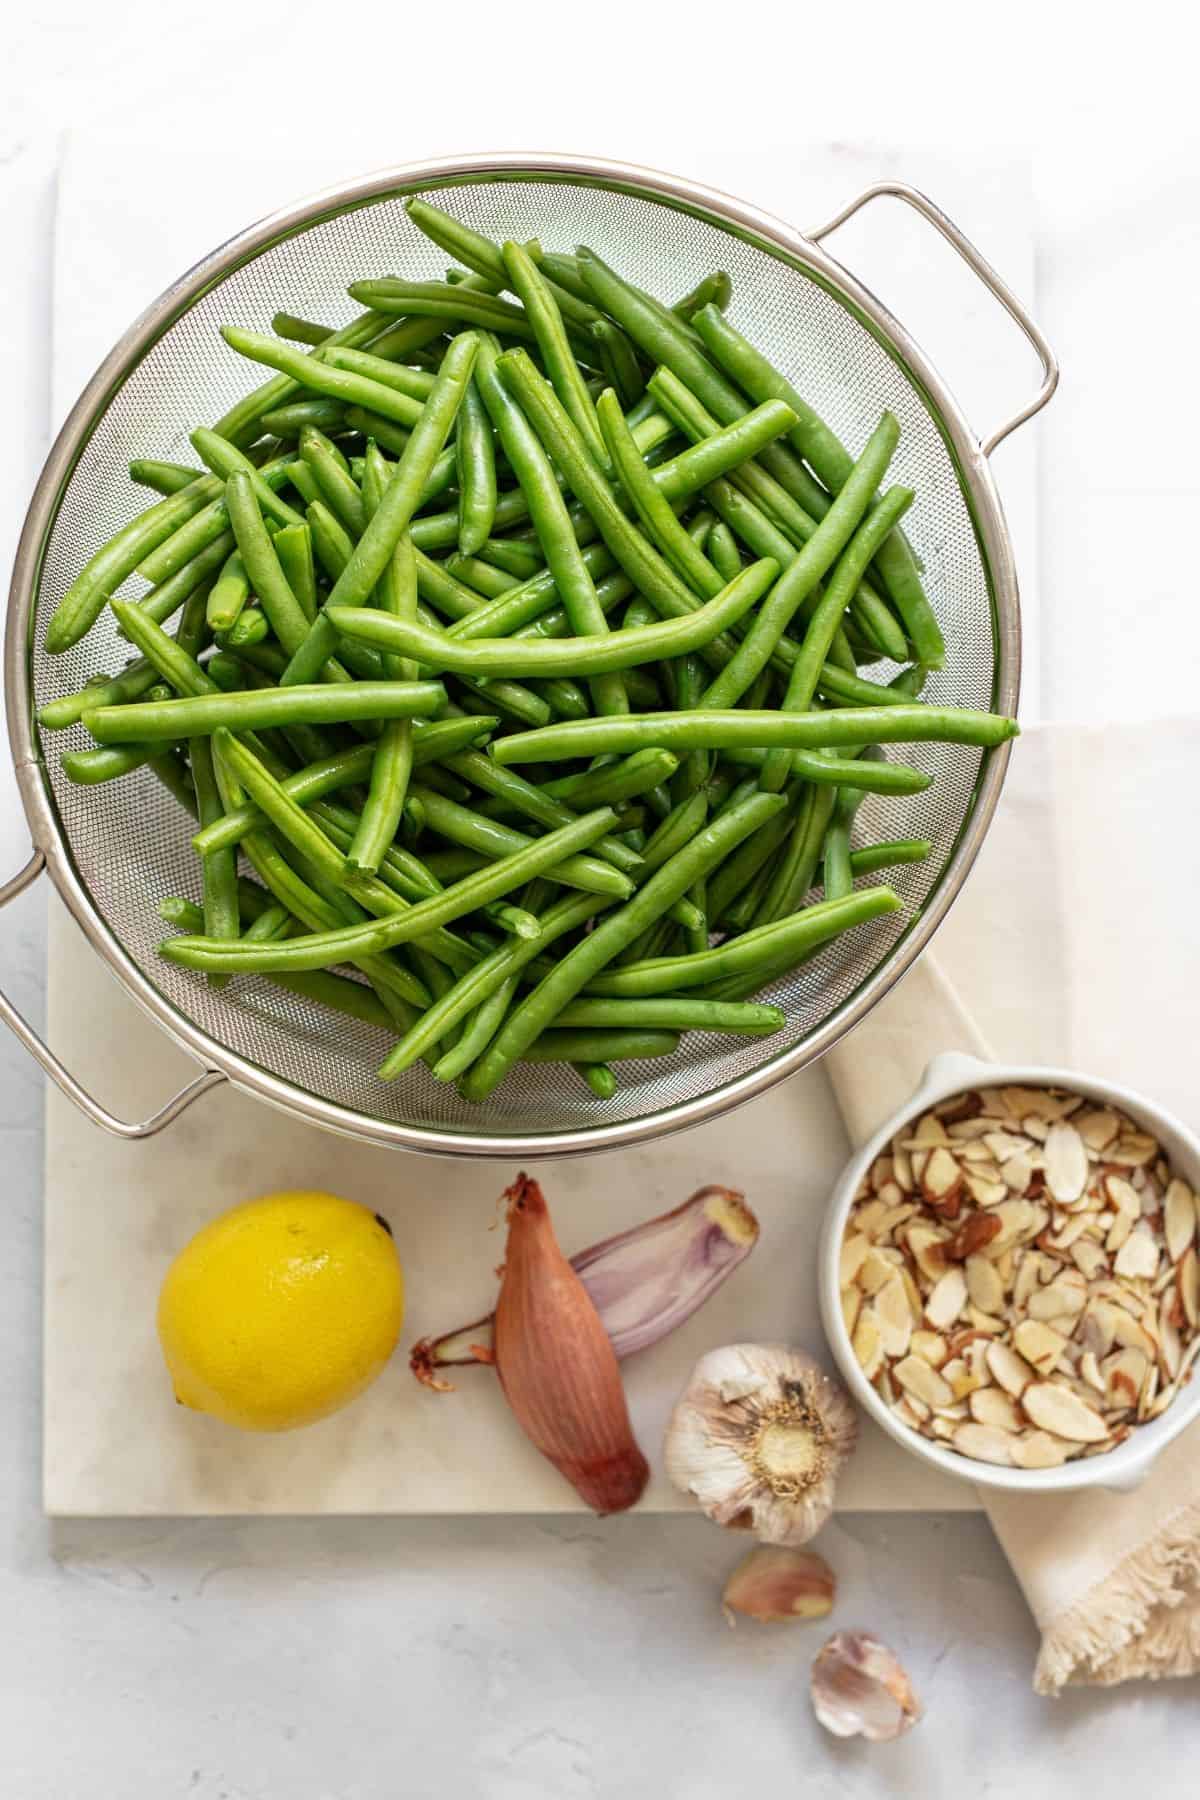 green beans, lemon, almonds and shallot